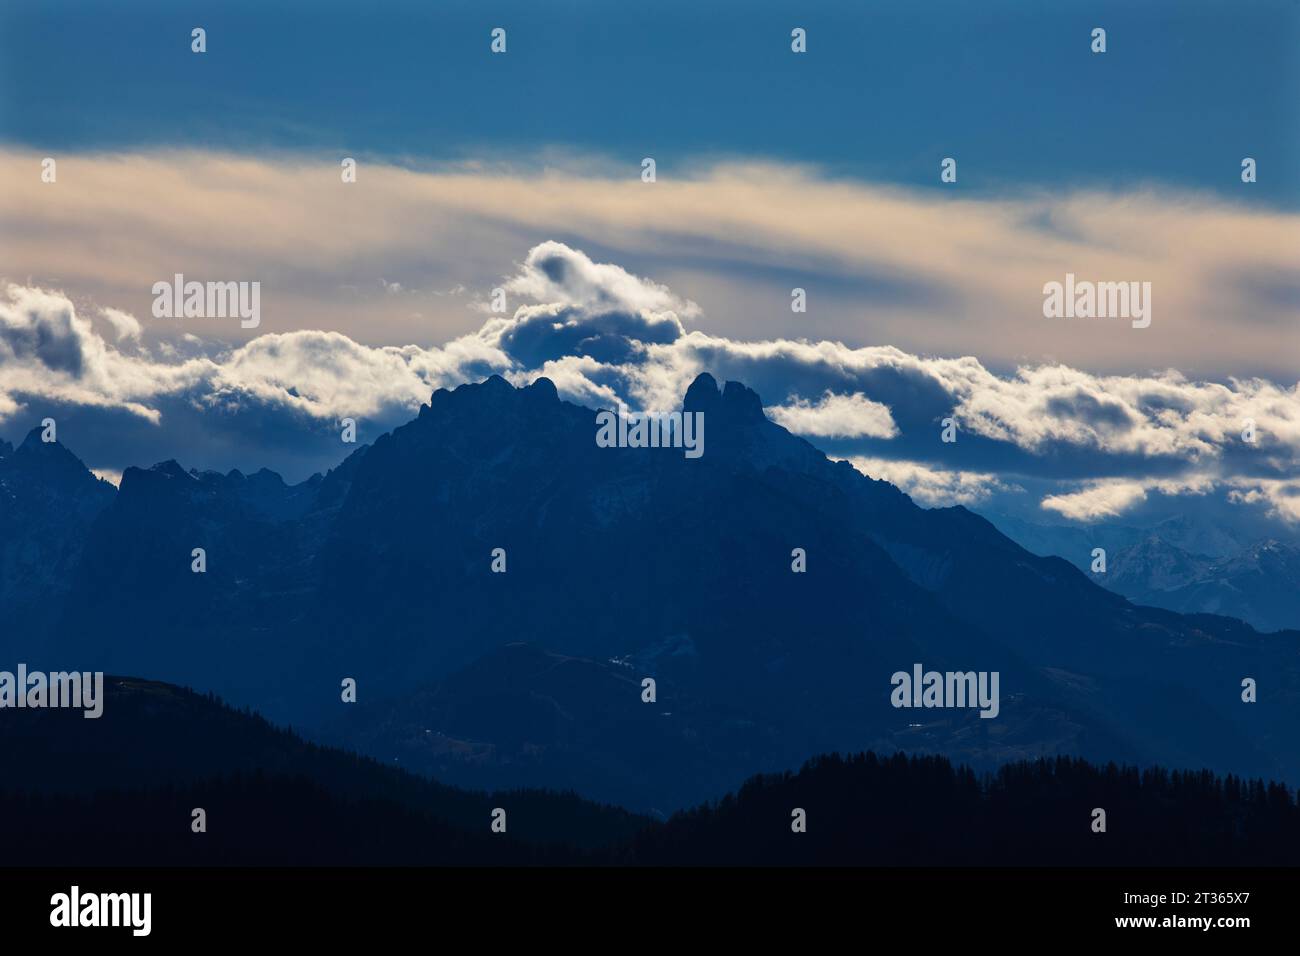 Austria, Salzburger Land, Dachstein Mountains viste dalla cima del monte Osterhorn all'alba nebbiosa Foto Stock